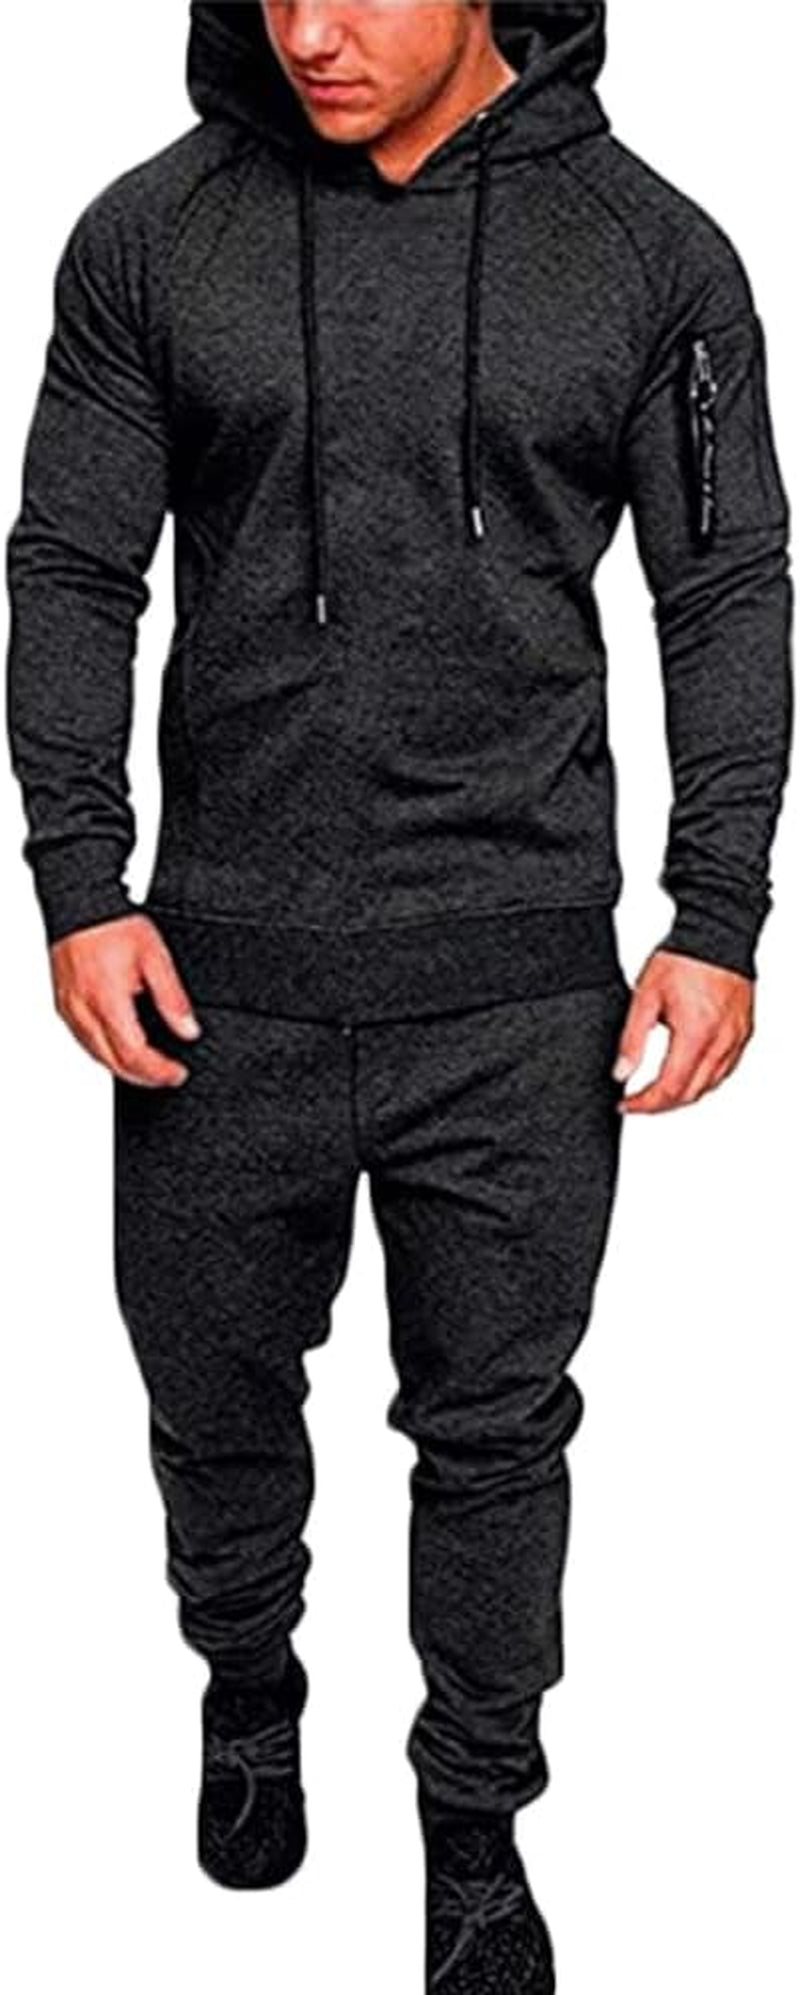 Men’S Tracksuits Camo Casual Fashion Sweatsuits Hoodie Sports Suit Athletic Comfy Sets Jogging 2 Piece